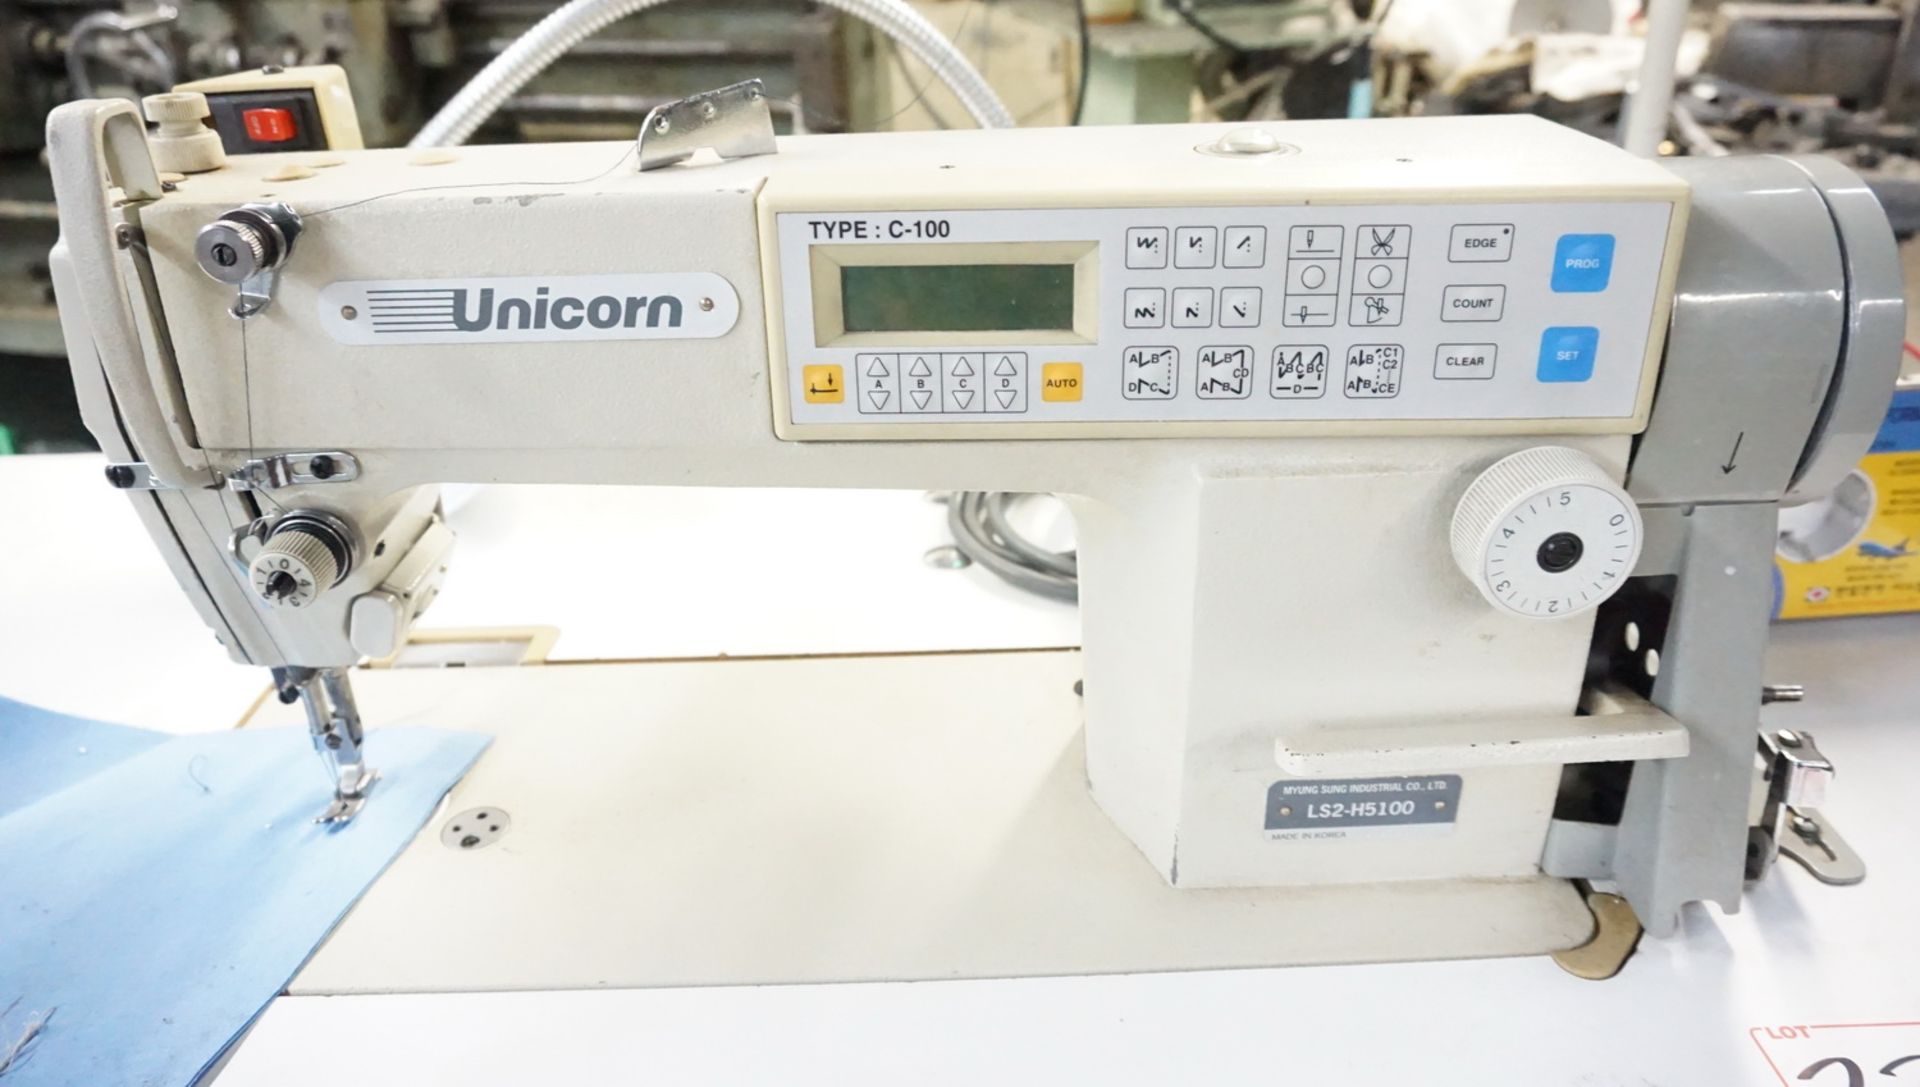 UNICORN LS2-H5100 SINGLE NEEDLE PROGRAMMABLE SEWING MACHINE, S/N 98123627 - Image 2 of 5